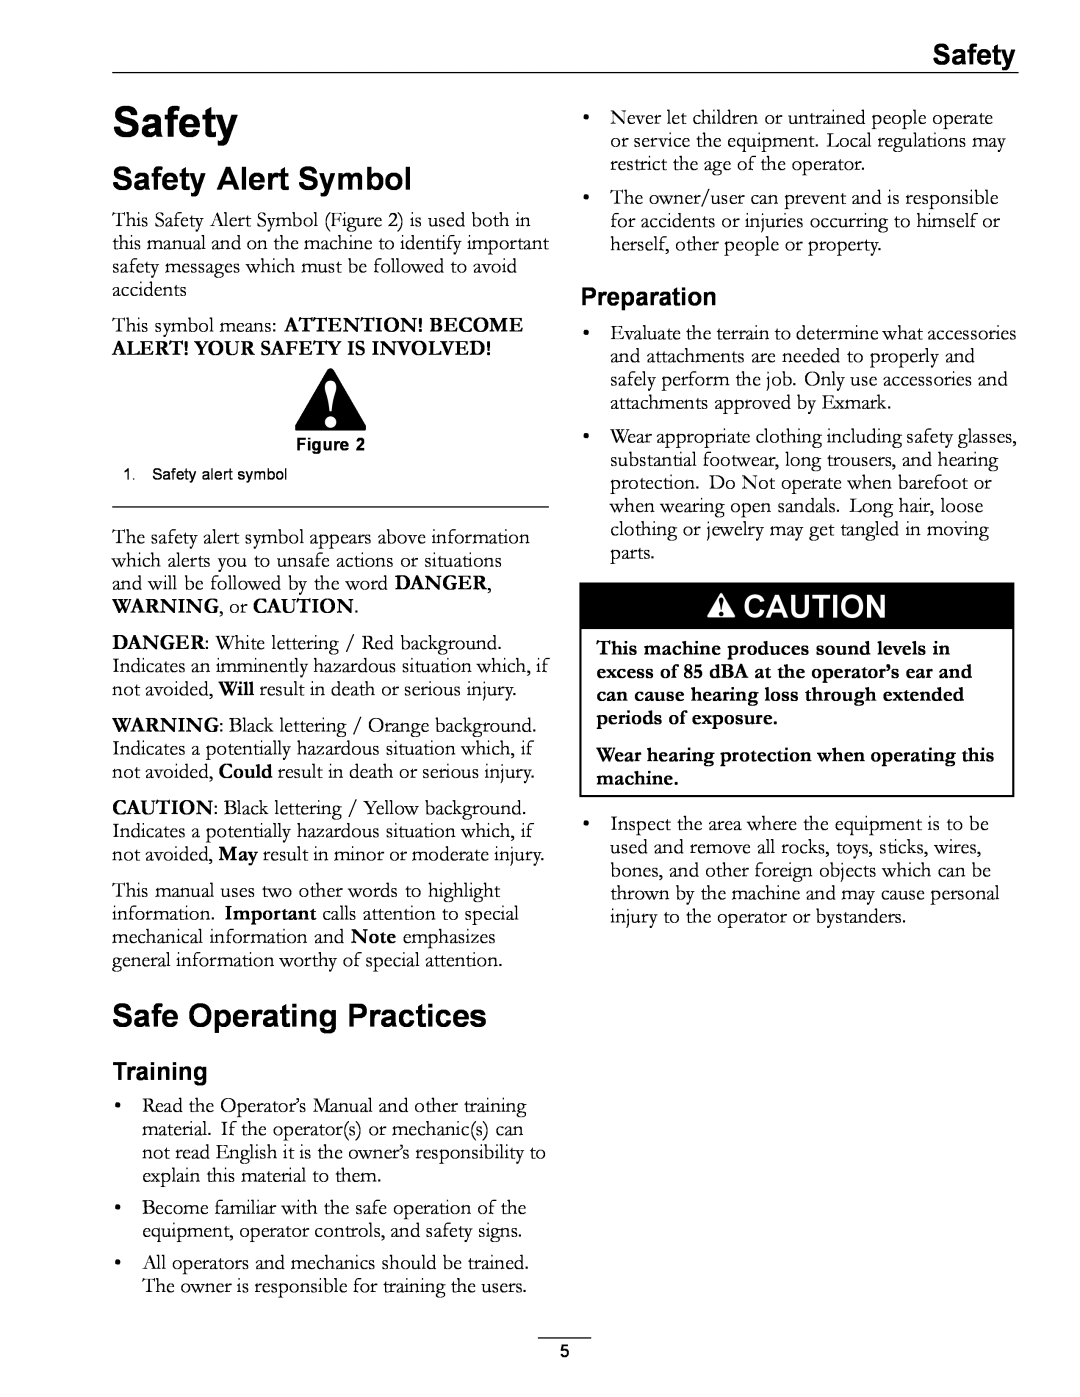 Exmark S/N 790, 000 & higher, 4500-471 manual Safety Alert Symbol, Safe Operating Practices, Training, Preparation 